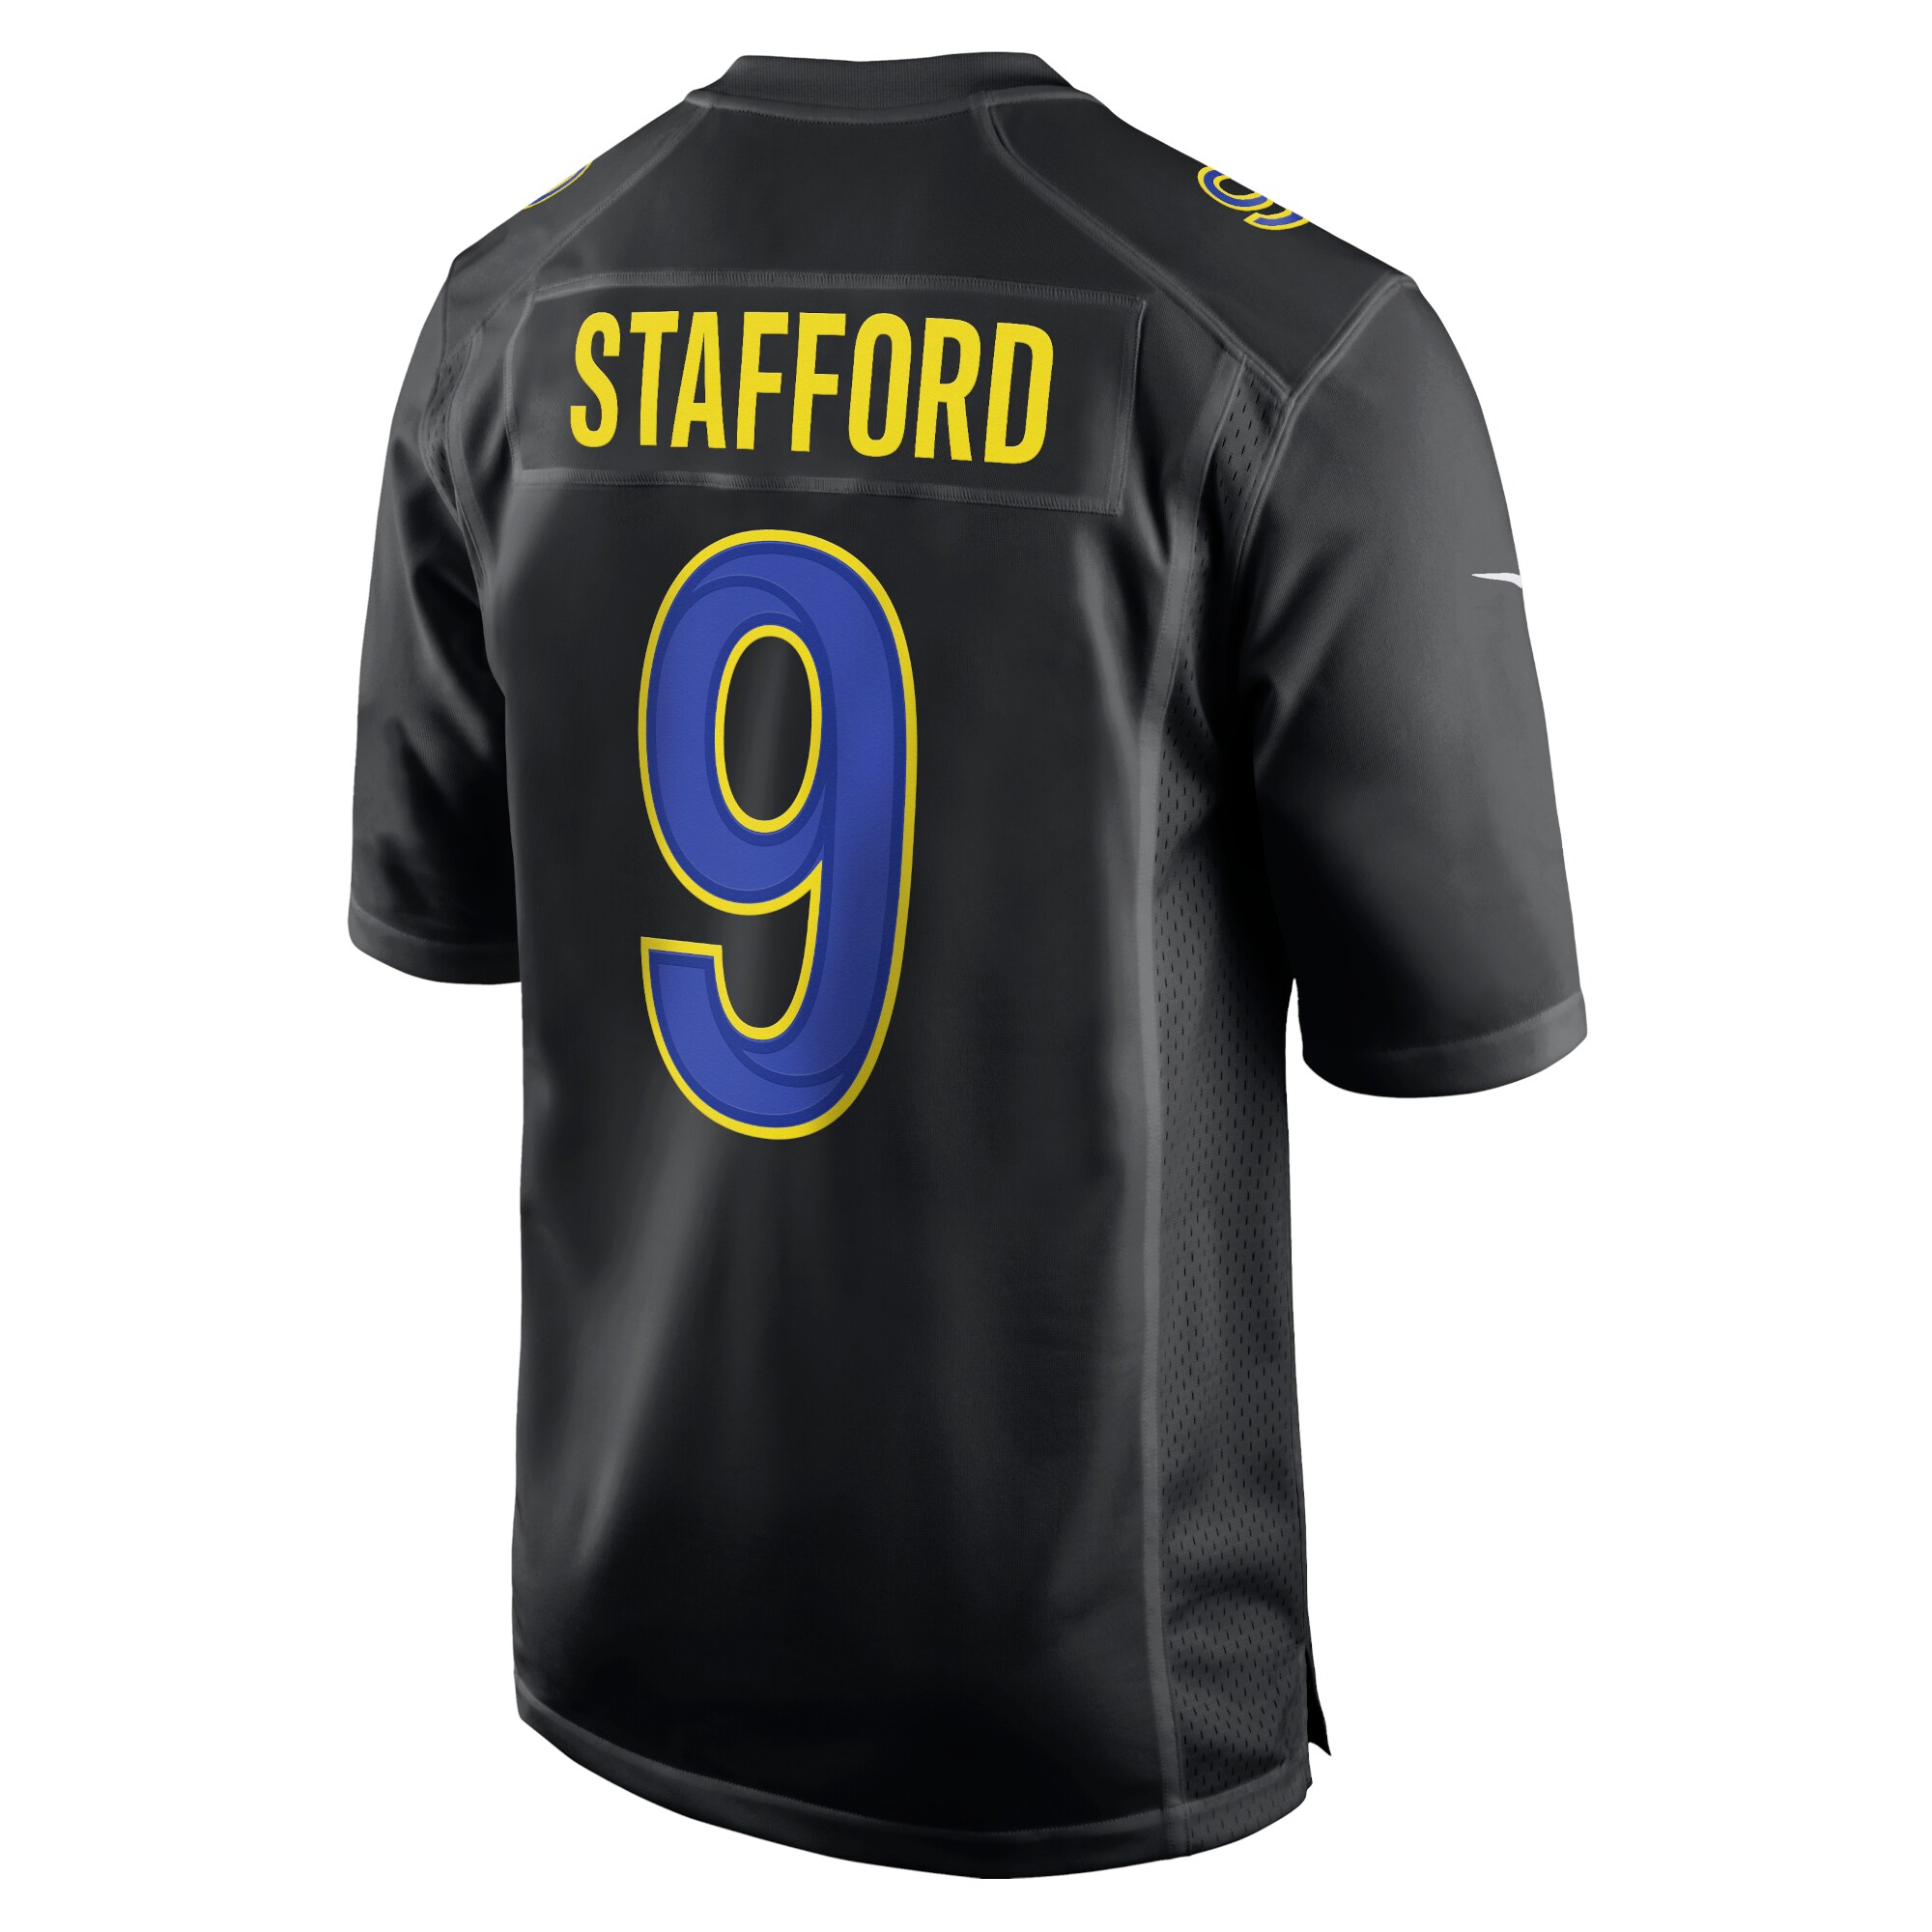 Men's Los Angeles Rams Matthew Stafford Nike Black Super Bowl LVI Game Fashion Jersey